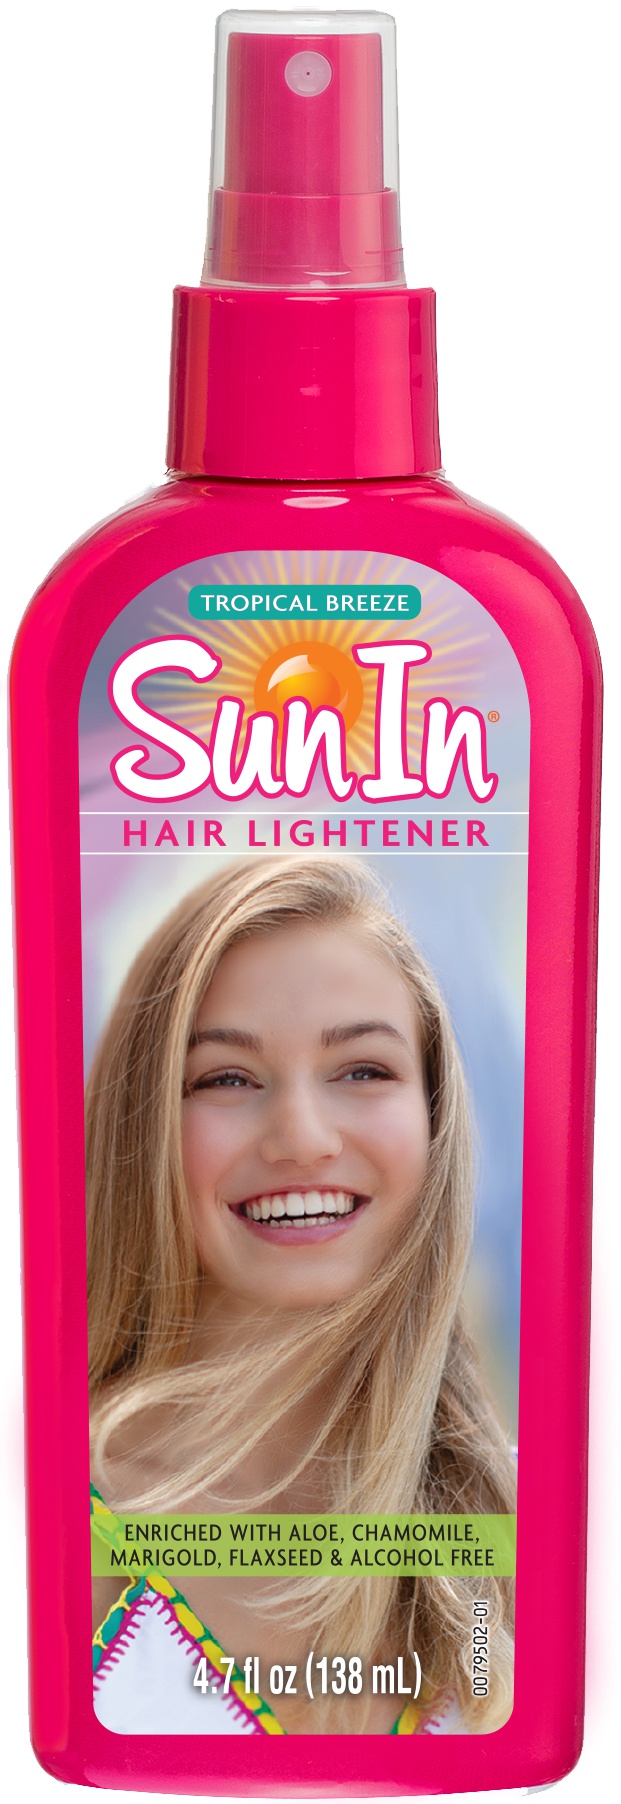 Sun-In Hair Lightening, Tropical Breeze